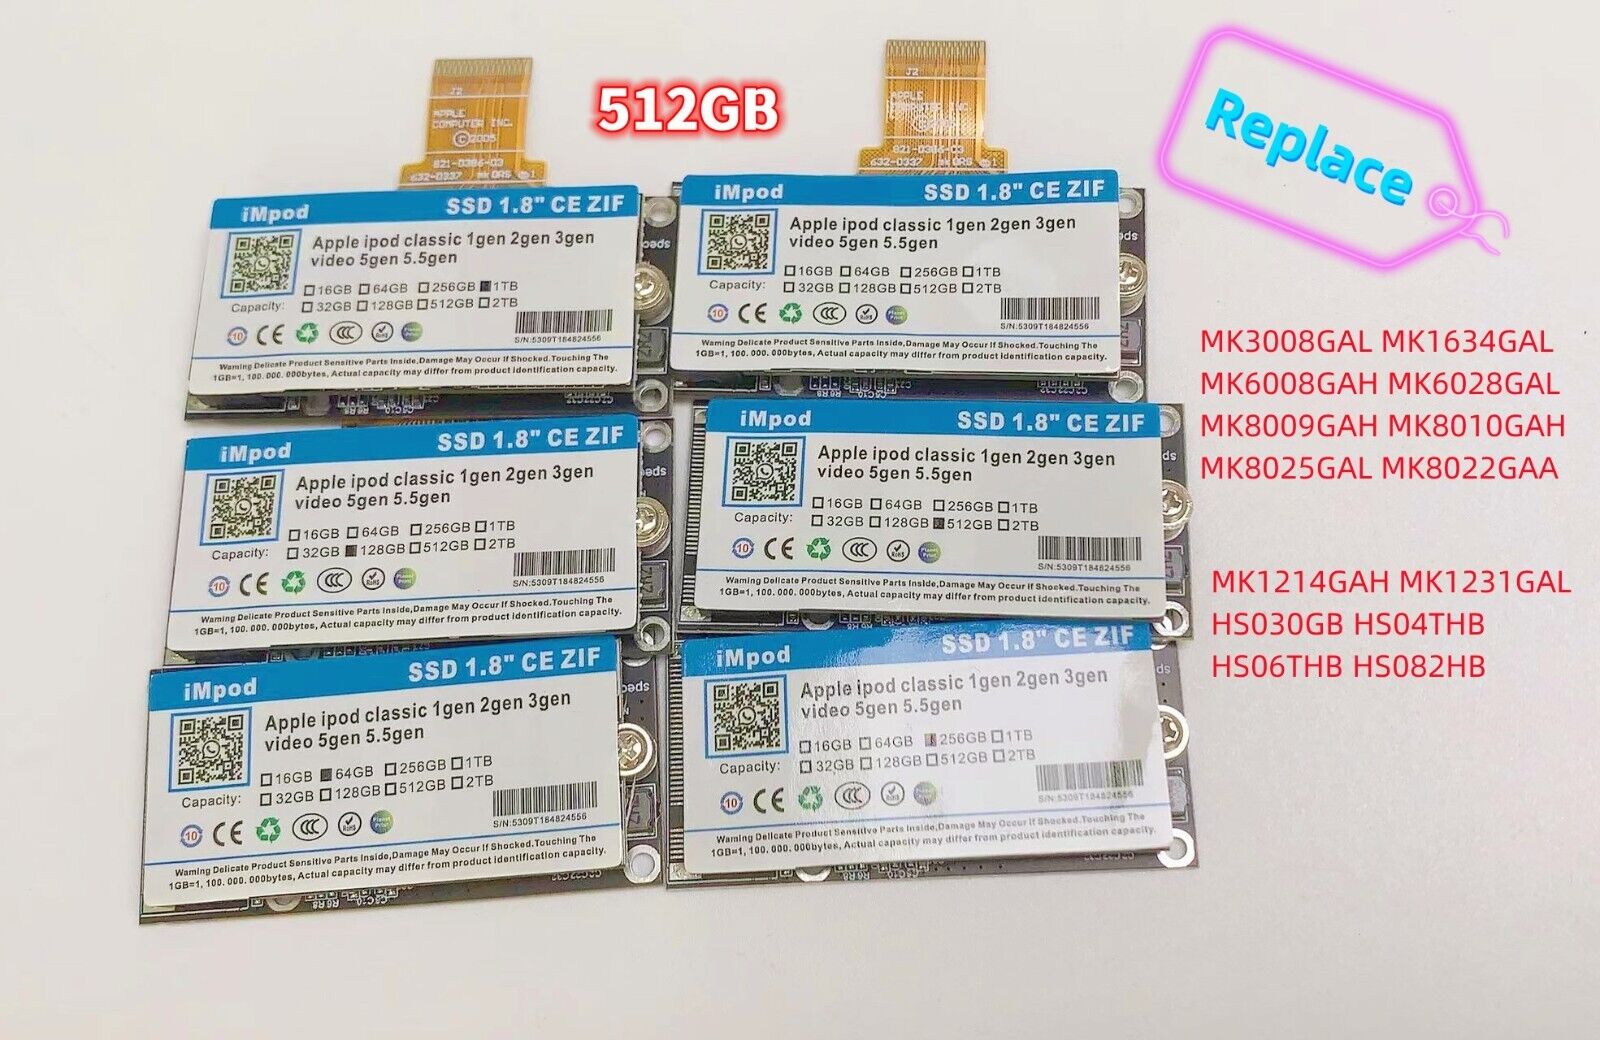 NEW 512GB ZIF CE SSD Upgrade MK1634GAL for iPod 5th 7th Gen Classic Logic Board